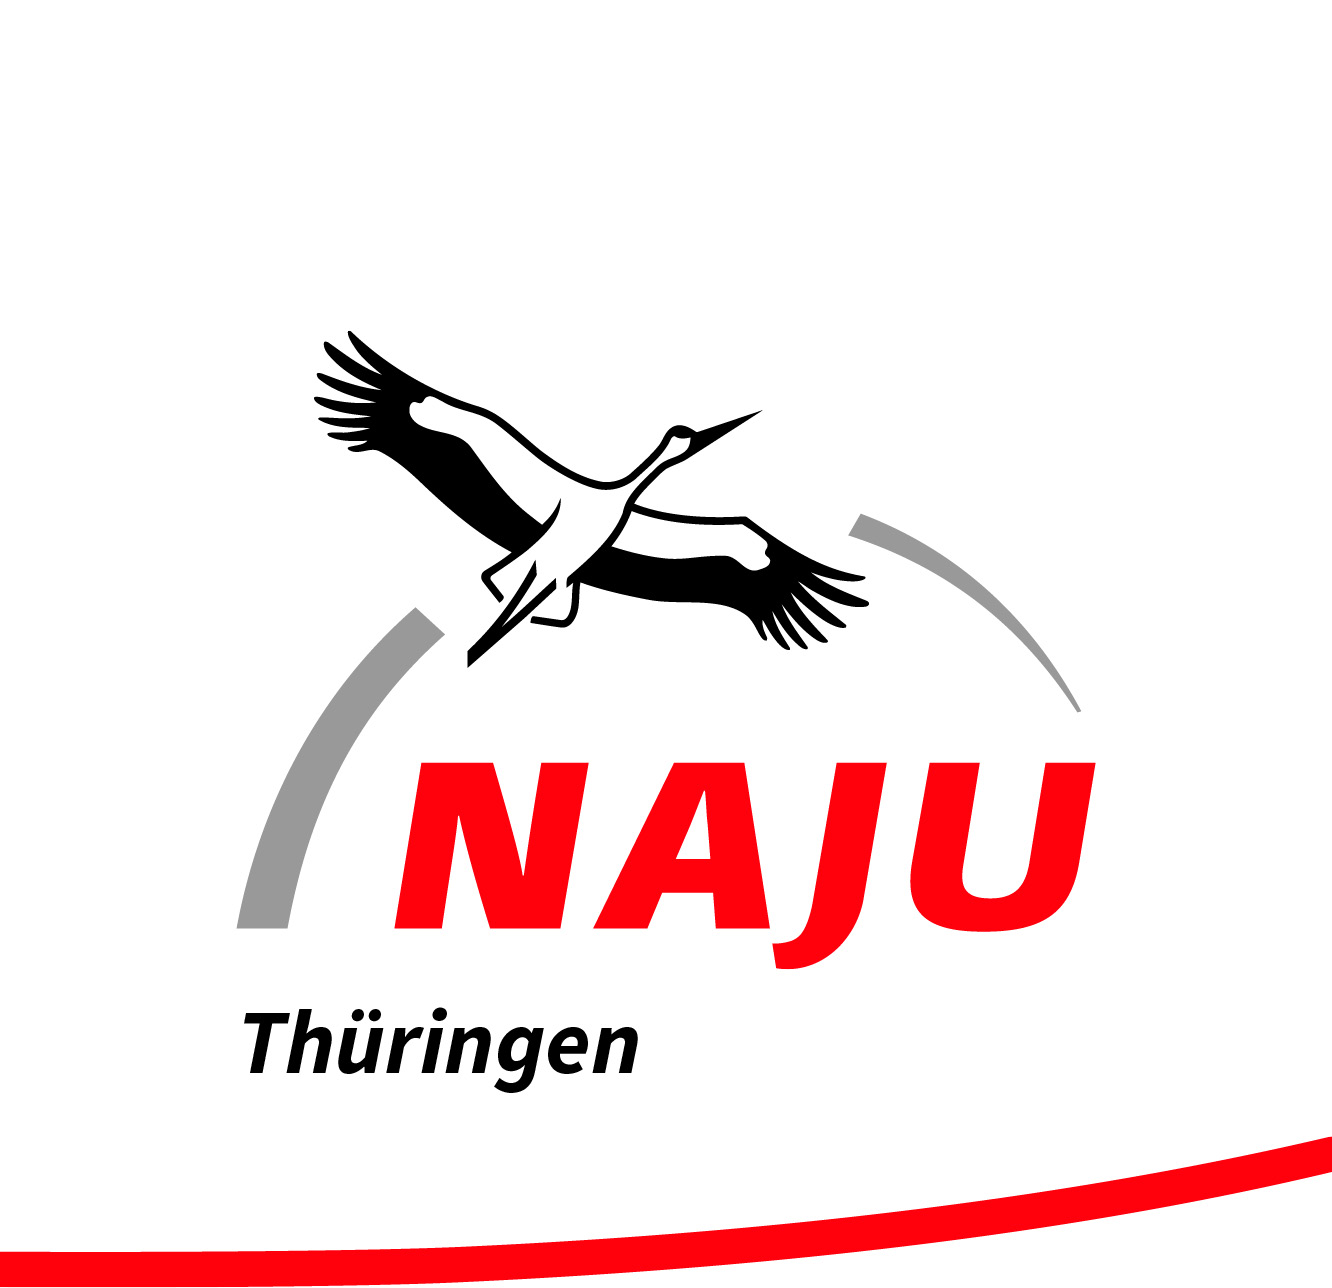 Naturschutzjugend (NAJU) Thüringen